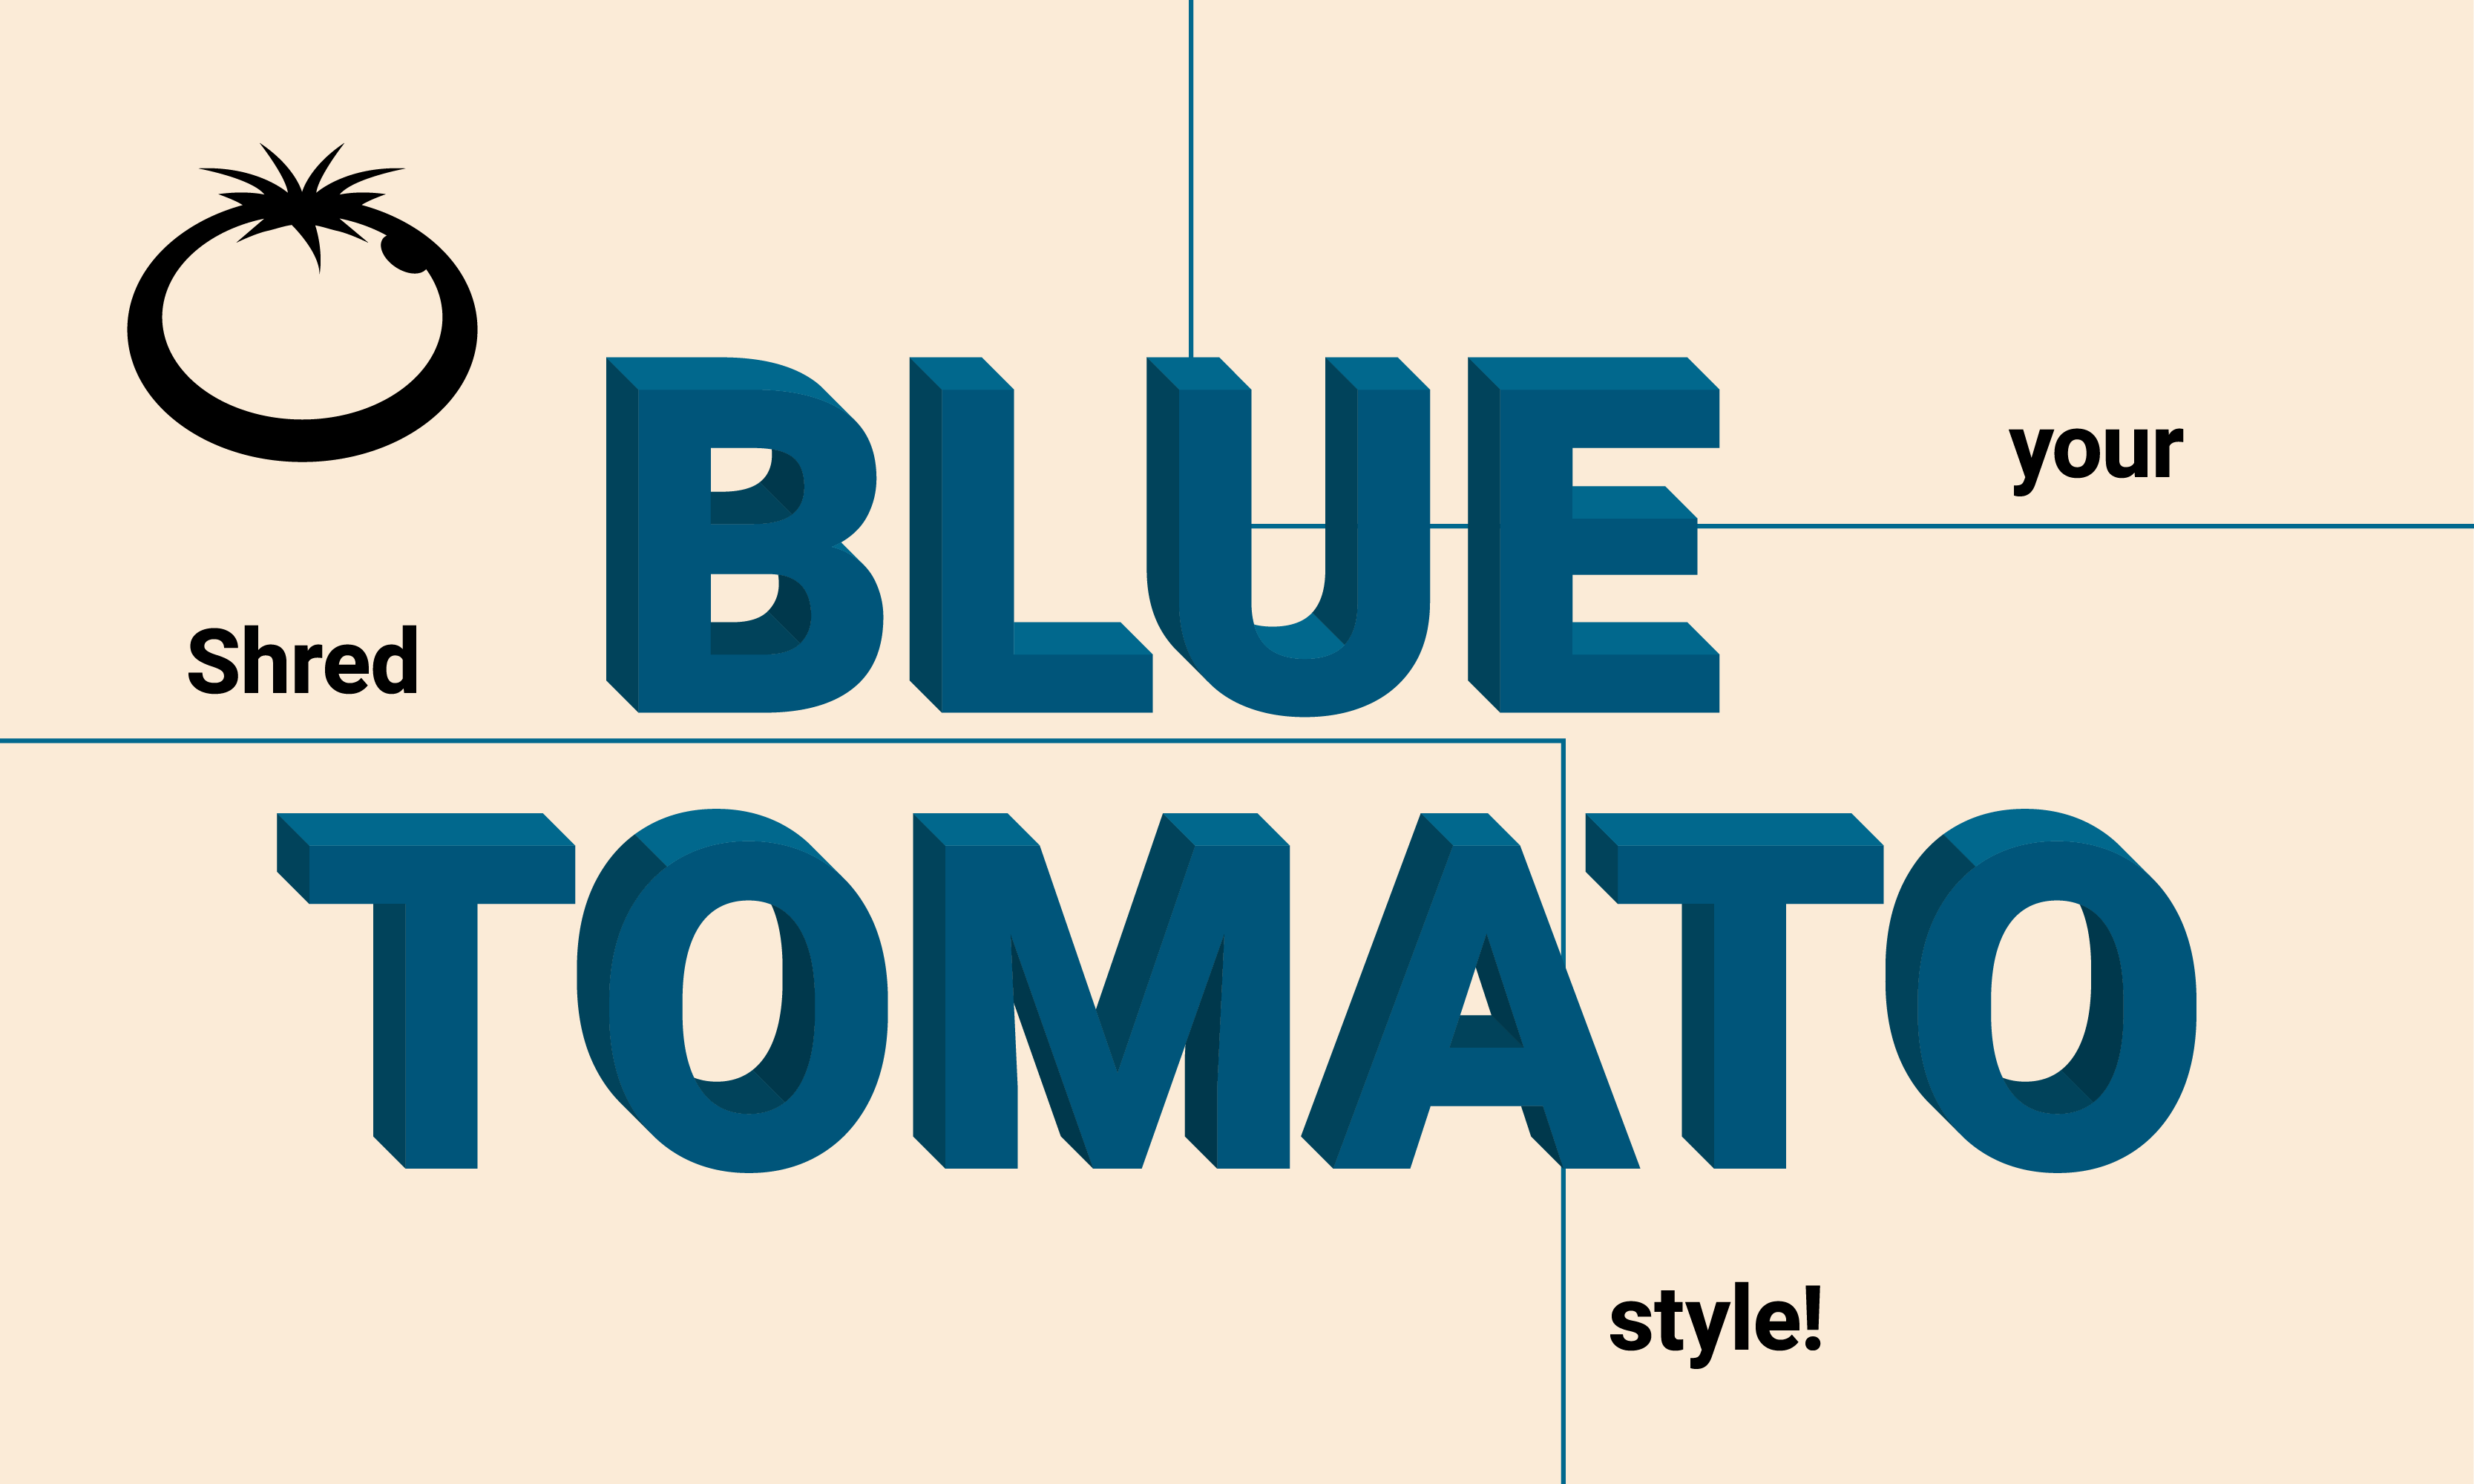 blue-tomato books 2021